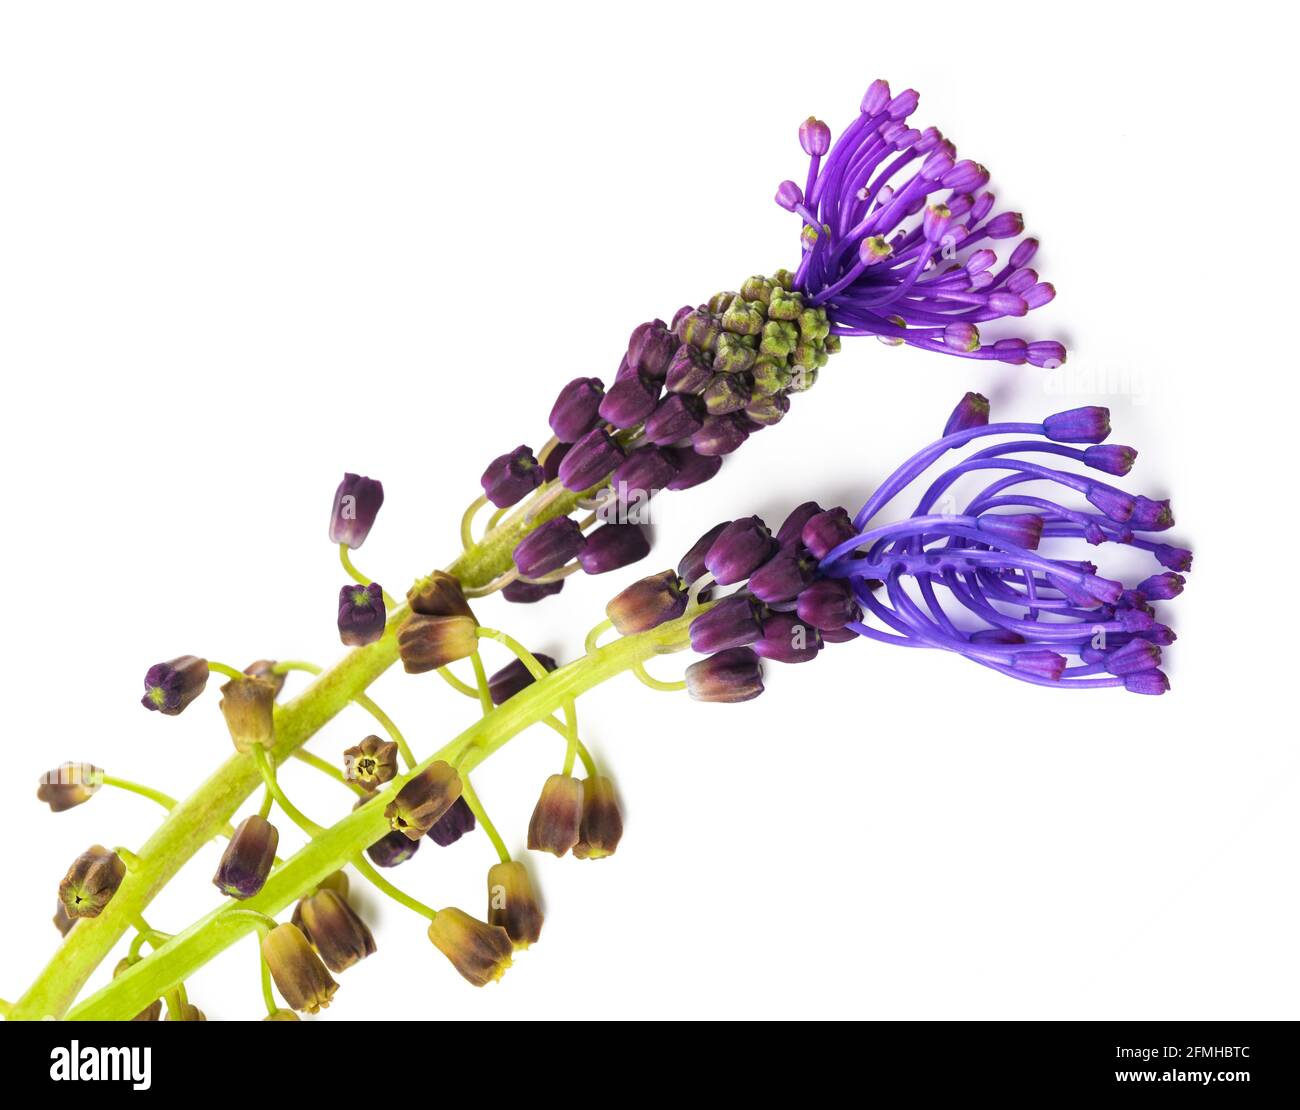 Tassel hyacinth flowers isolated on white background Stock Photo